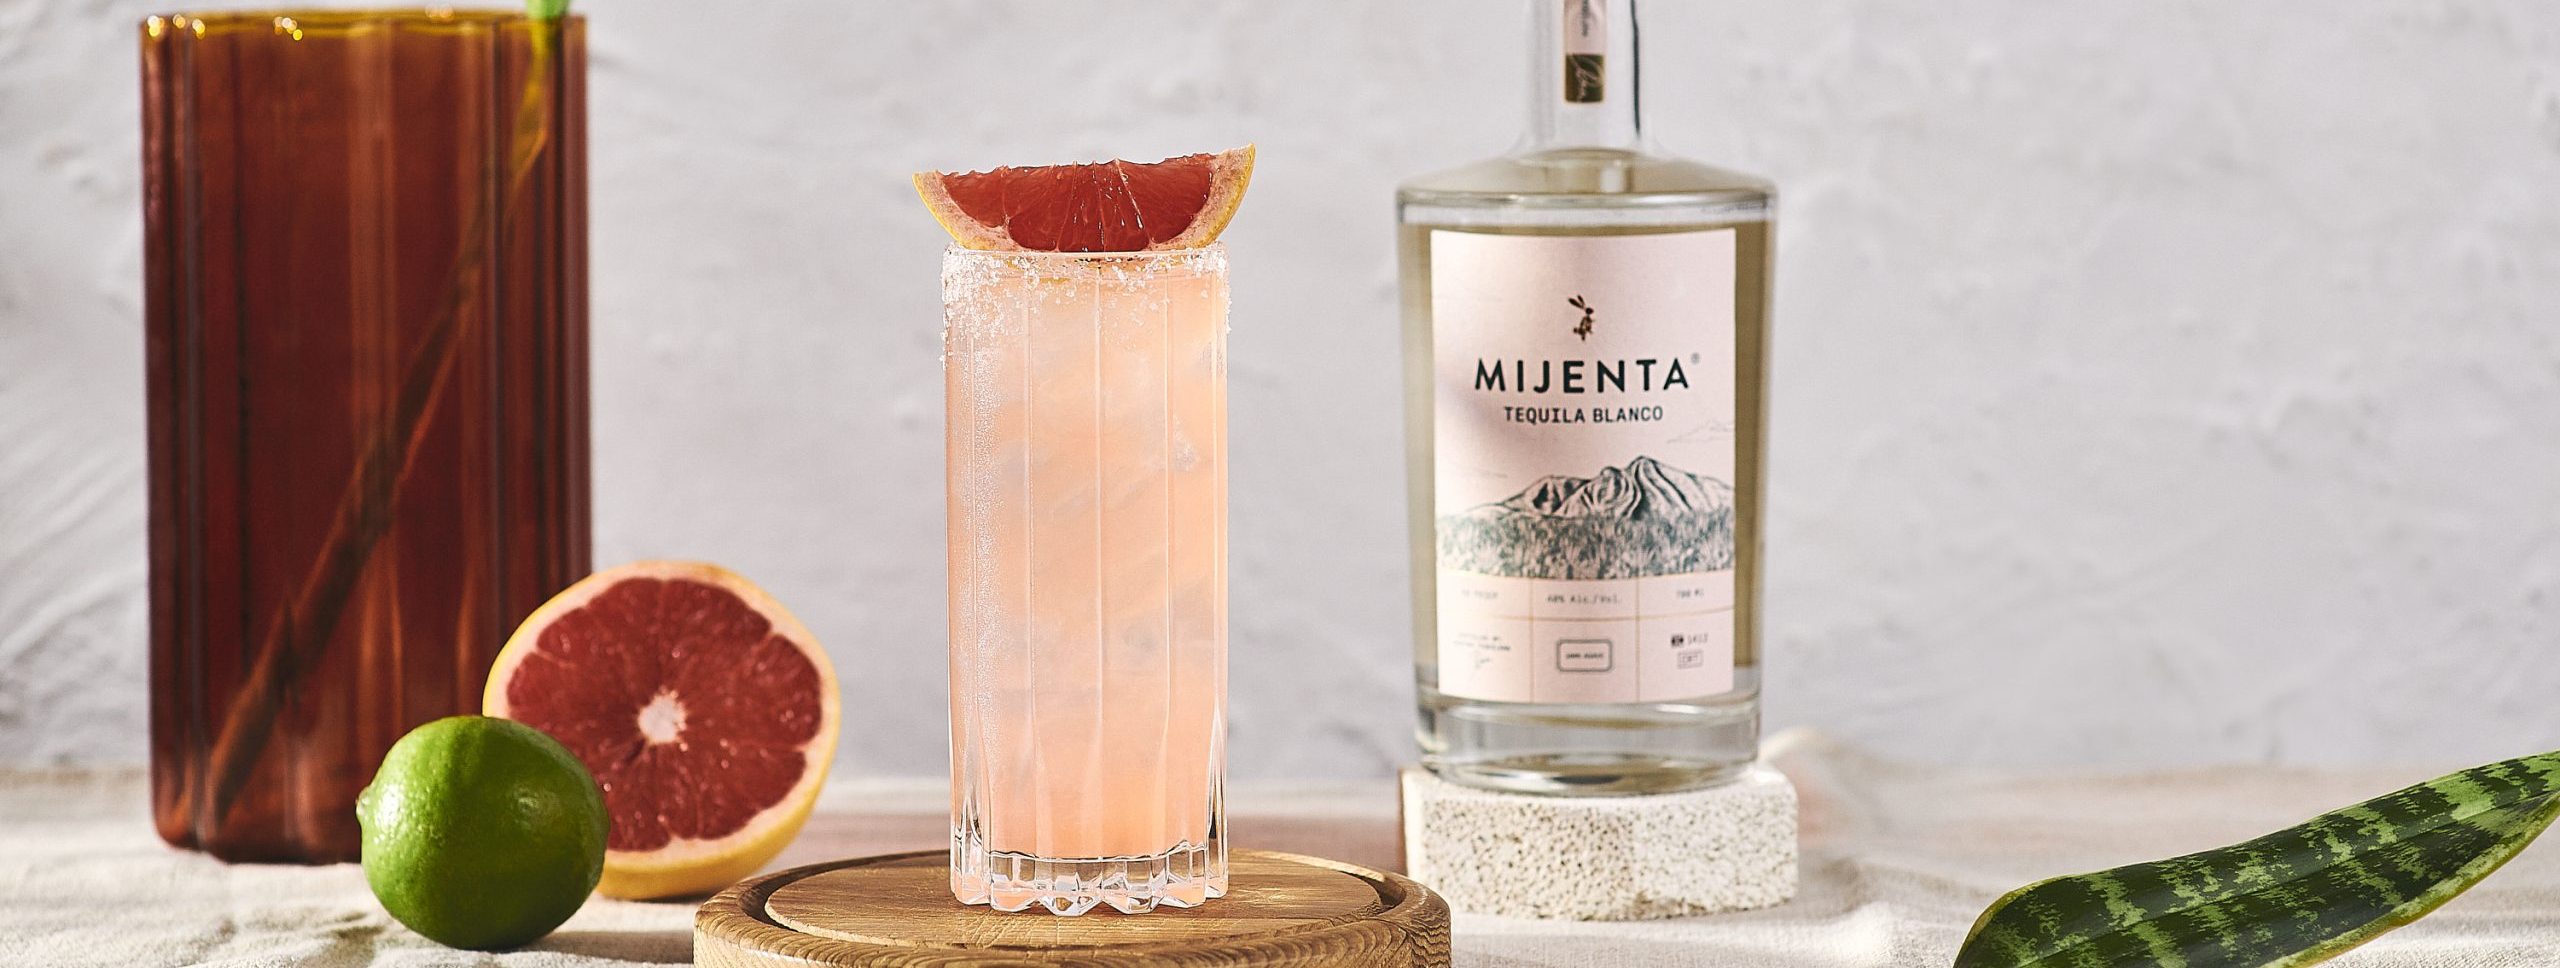 Mijenta Paloma in tall glass with grapefruit garnish and mijenta bottle